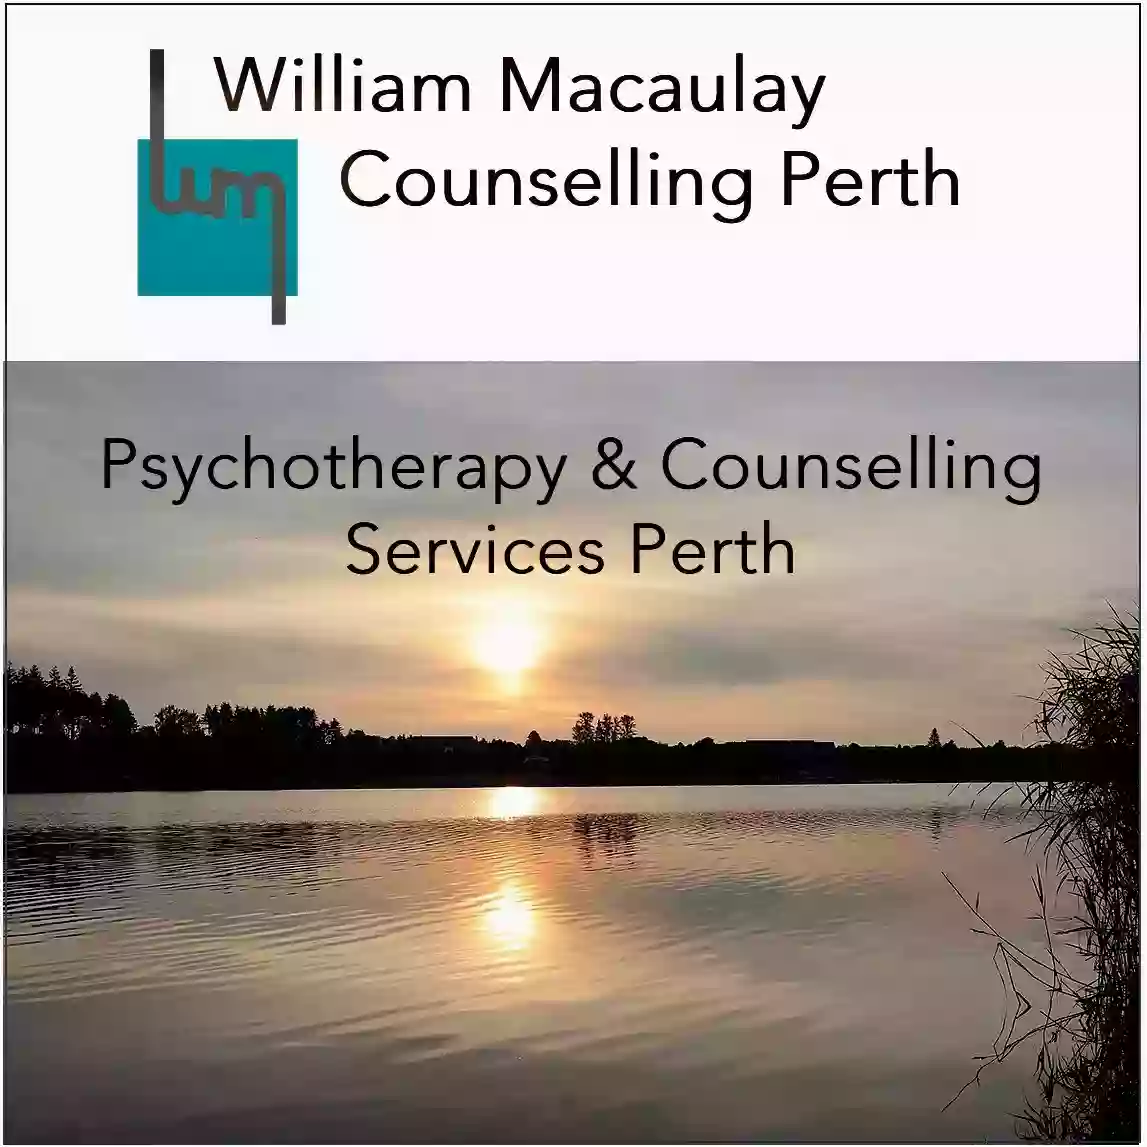 William Macaulay Counselling Perth